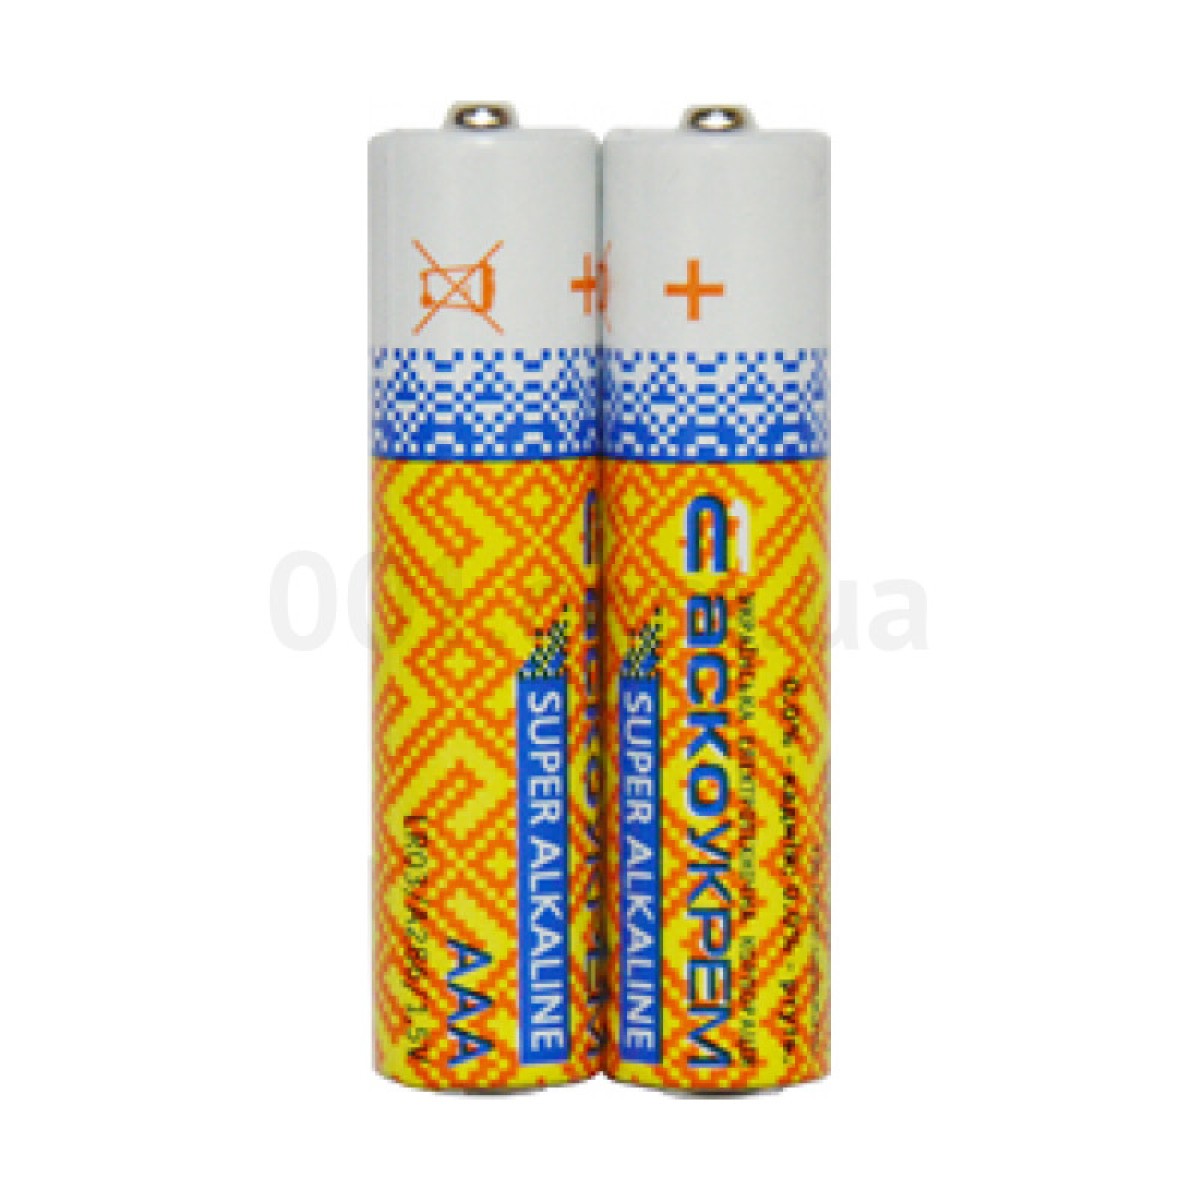 Батарейка лужна AАА.LR03.SP2, типорозмір AAA упаковка shrink 2 шт., АСКО-УКРЕМ 256_256.jpg